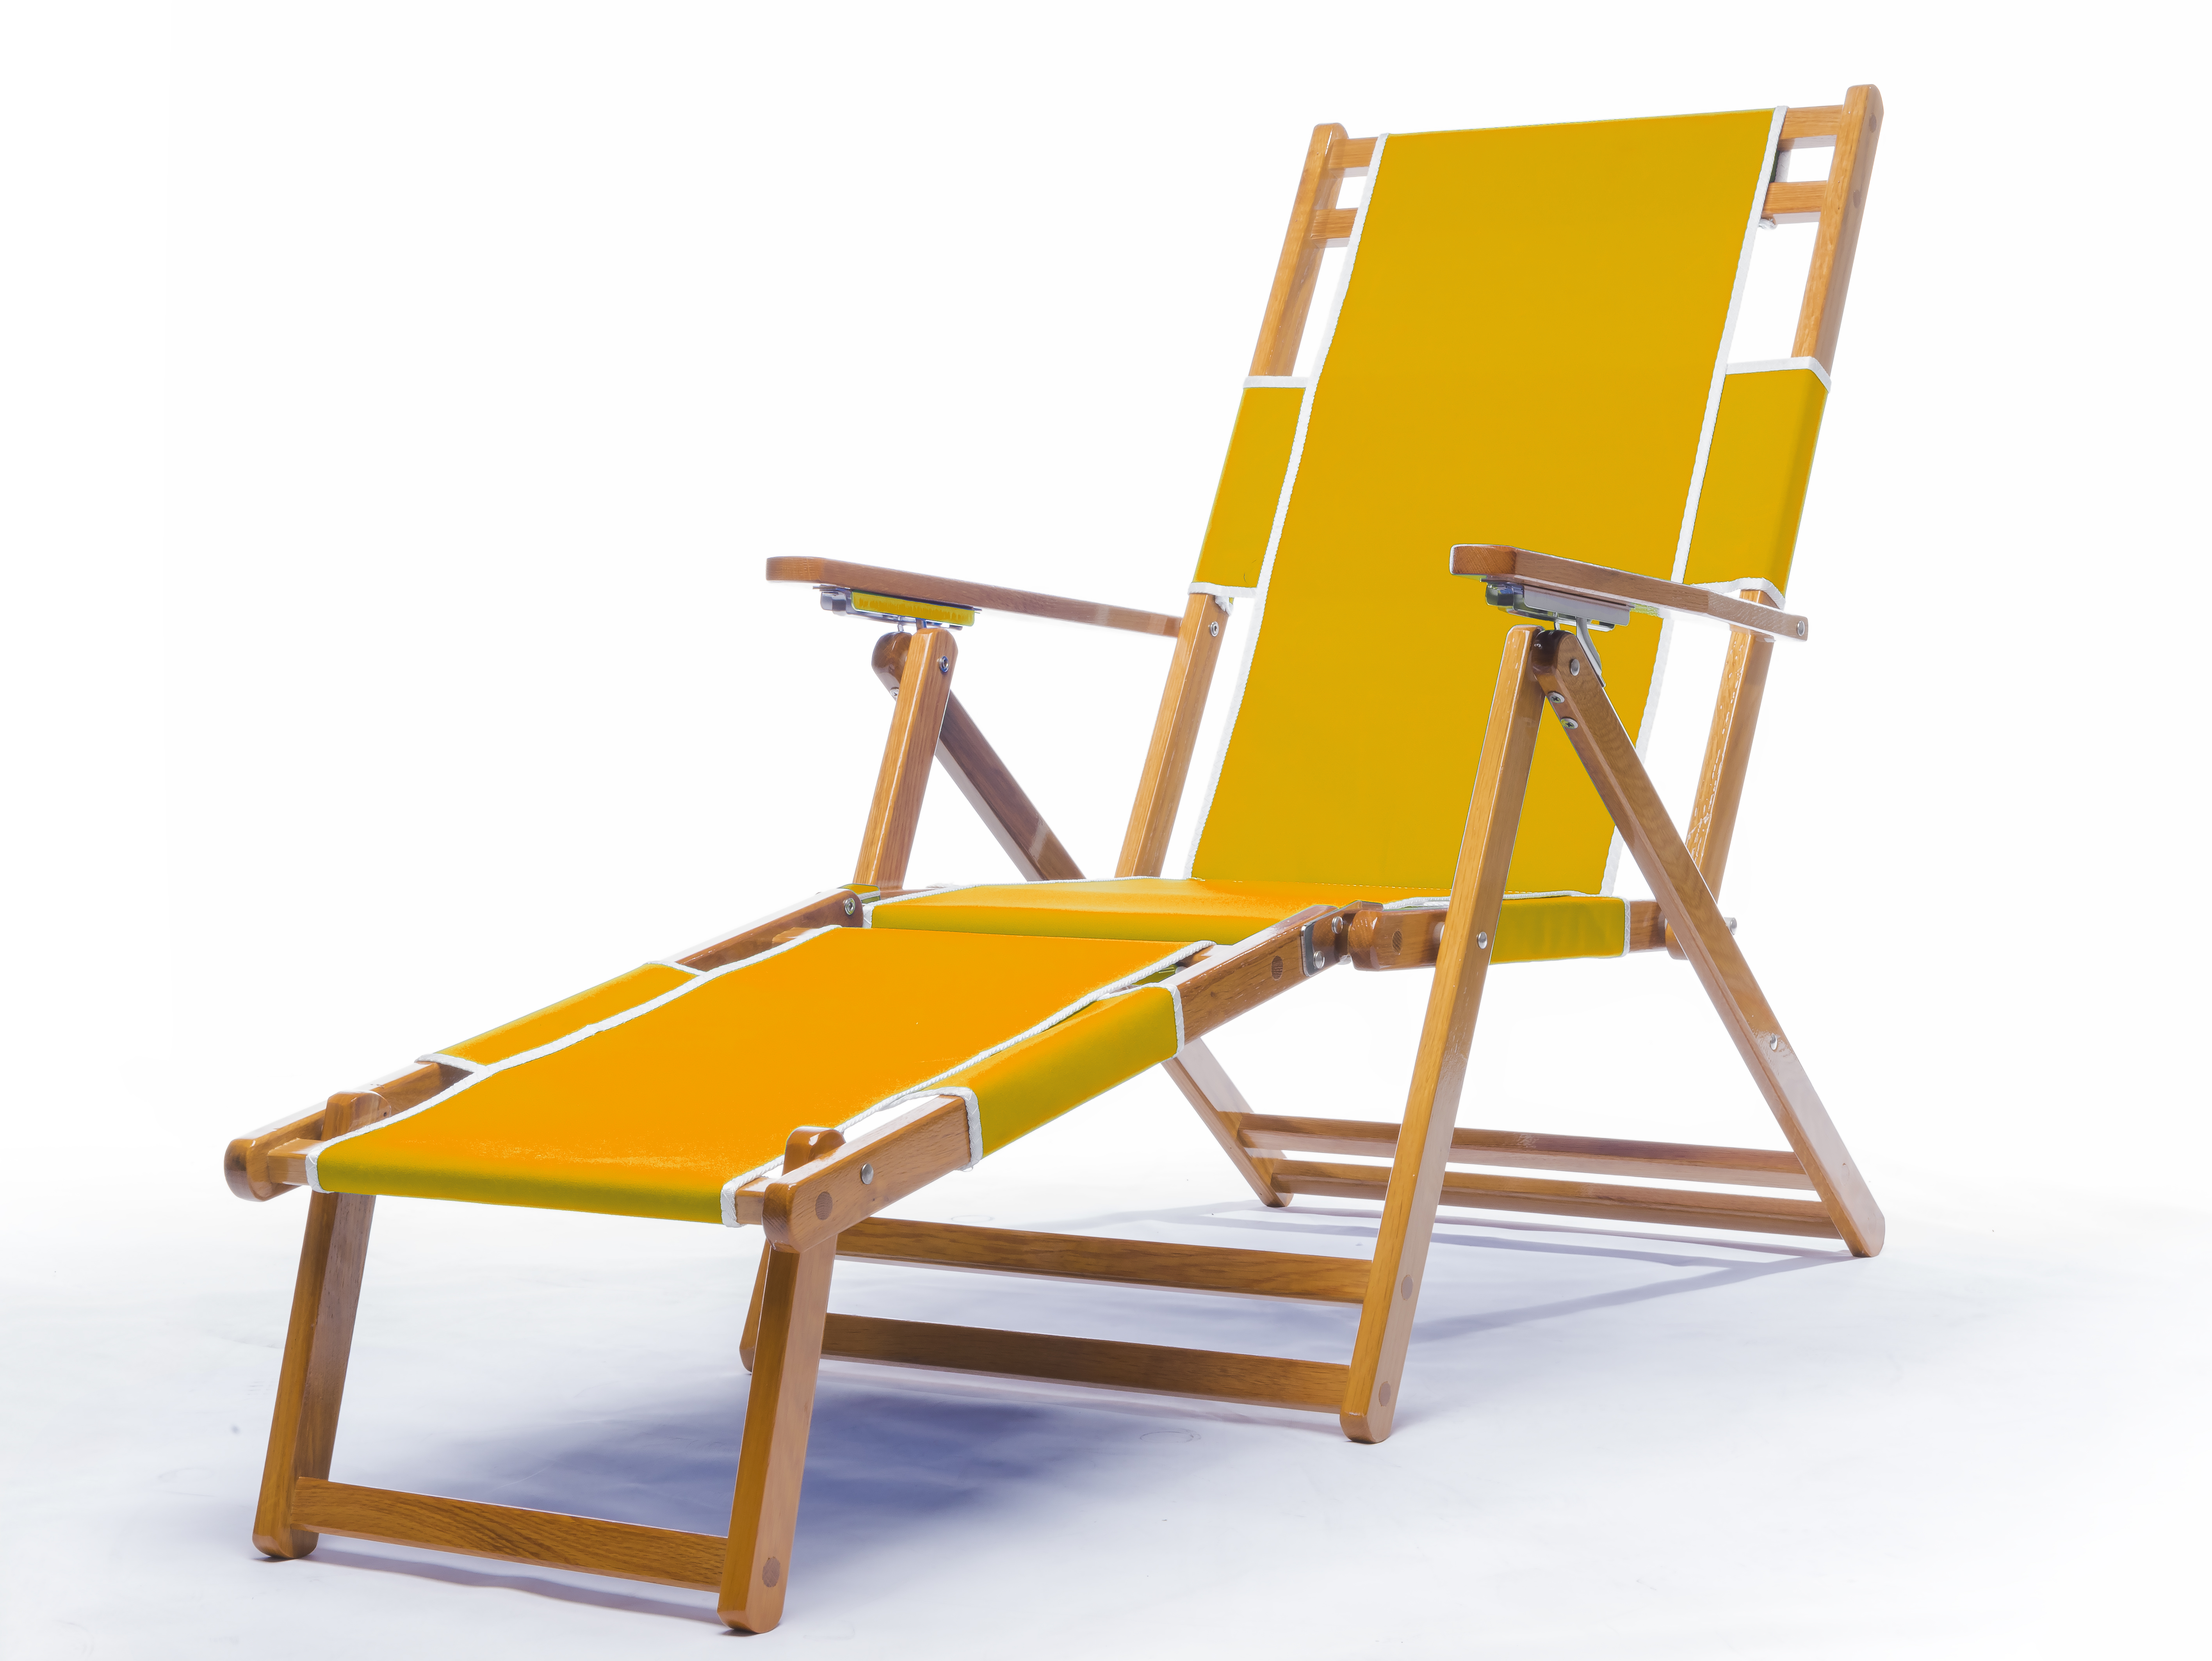 Beach Chair
Sunflower Yellow
$189.00
